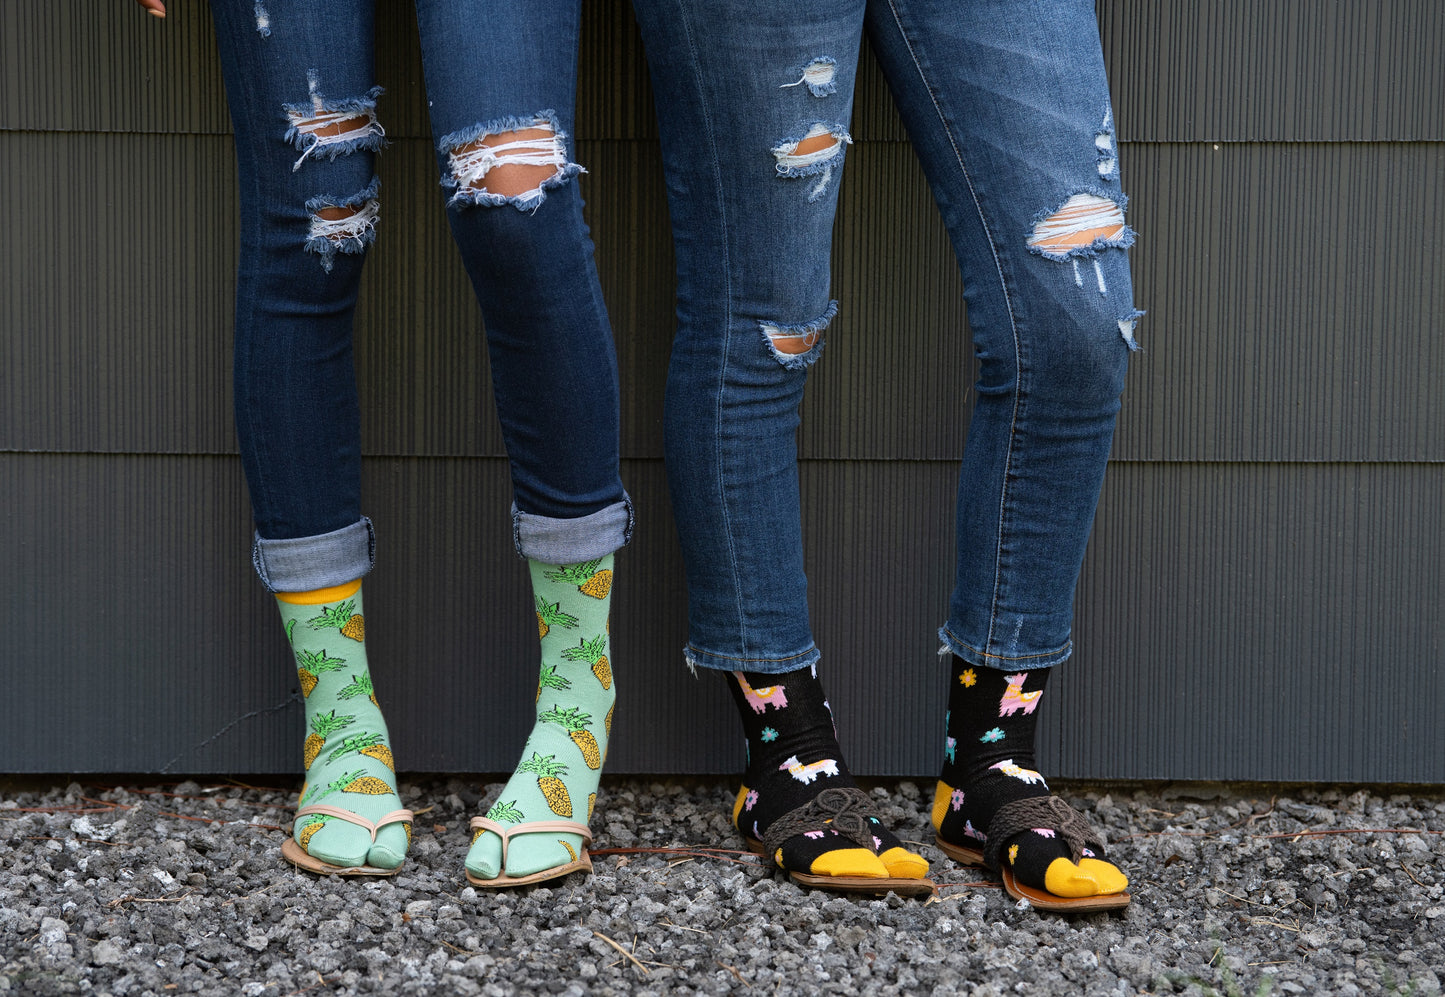 1 Pair - V-Toe Flip-Flop Tabi Socks - Pineapple Style